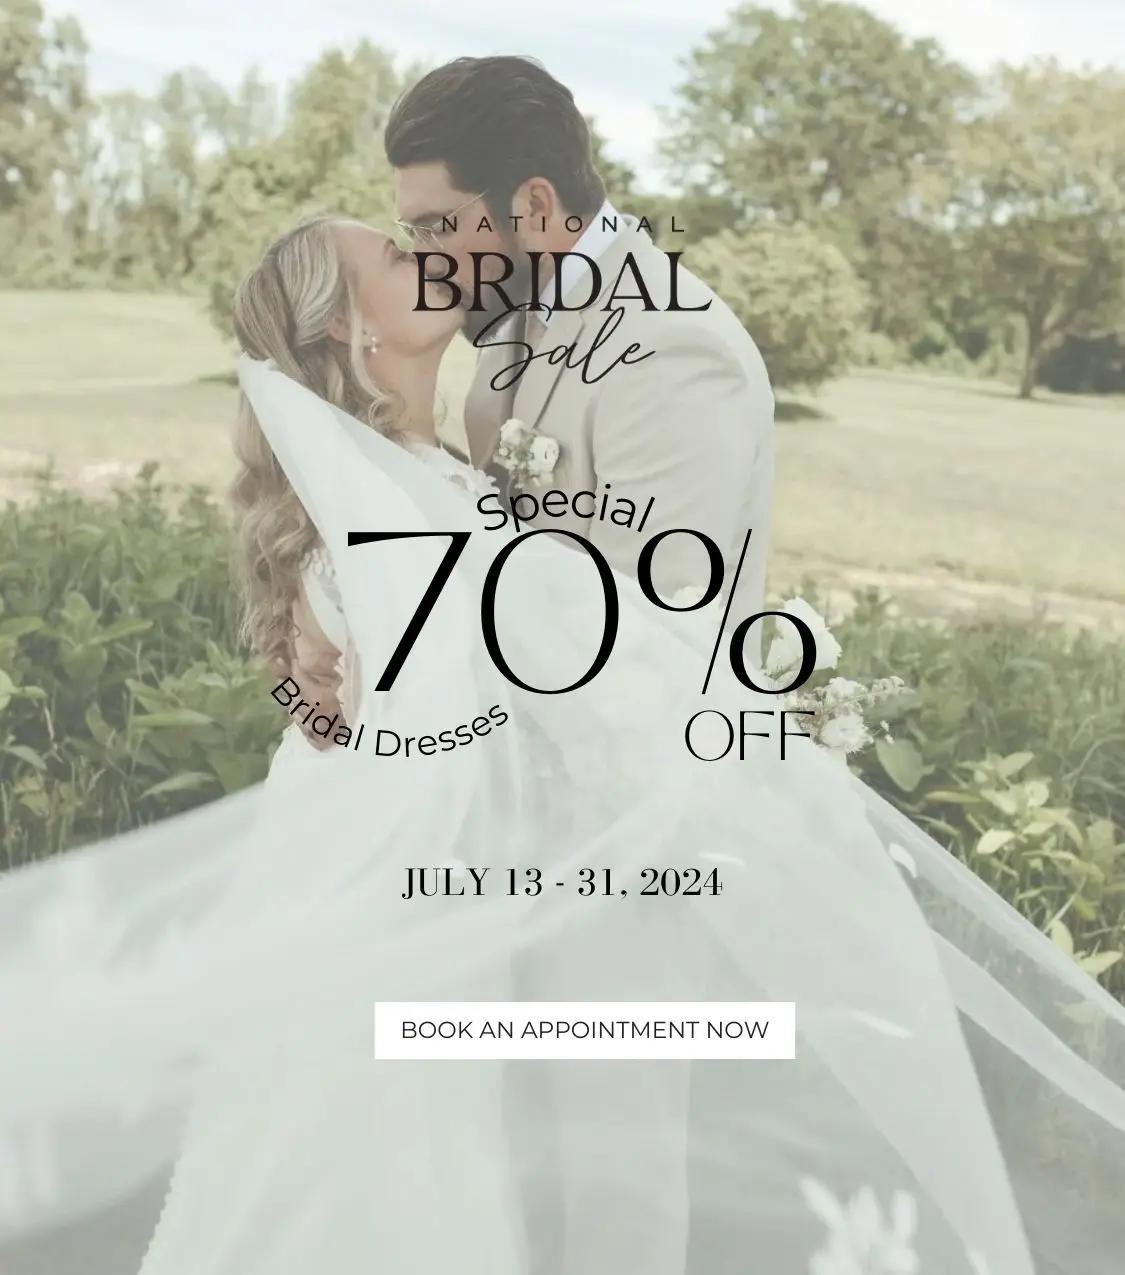 National Bridal Sale at Bella Bridal Gallery